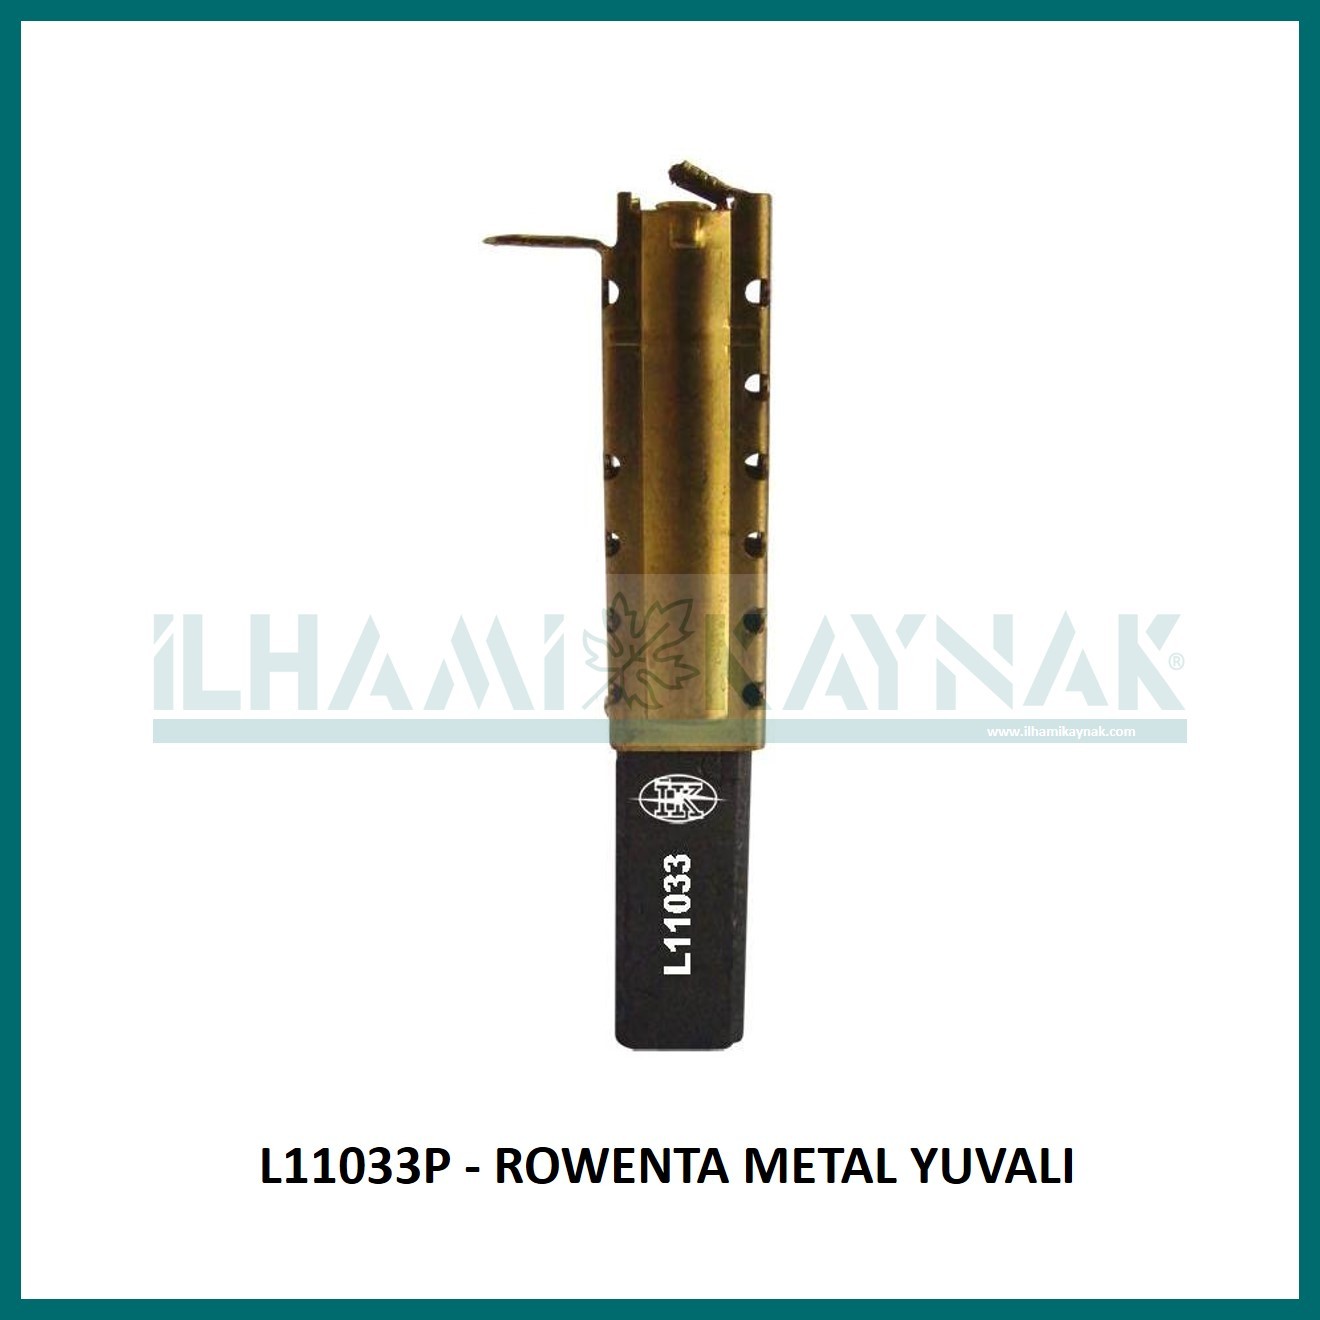 L11033P - ROWENTA METAL YUVALI - 6*9*30 mm - Minimum Satın Alım: 10 Adet